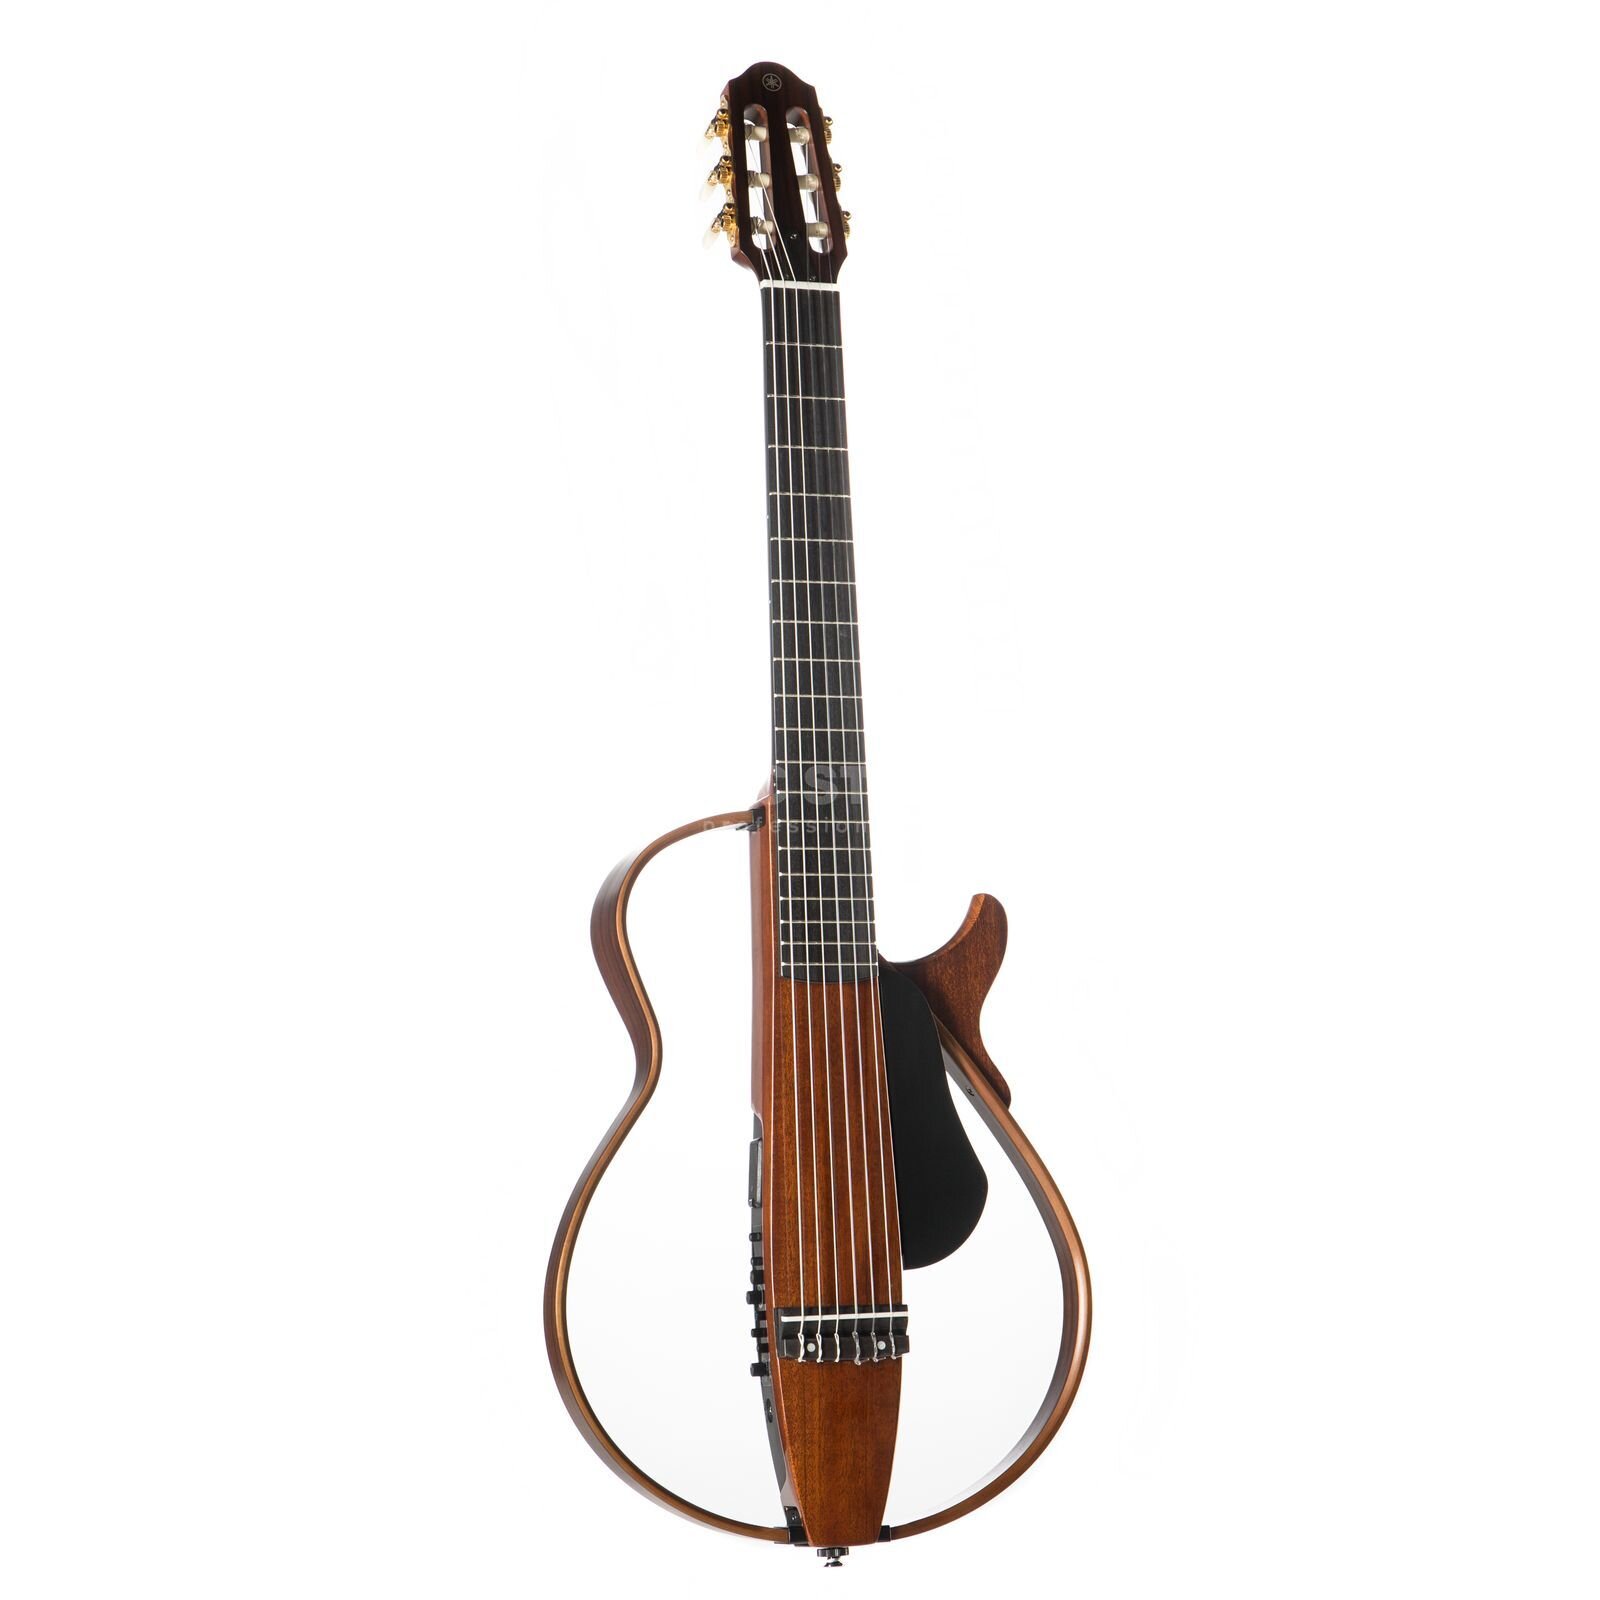 https://cdn1.boullard.ch/wp-content/uploads/products/173856-yamaha-guitars-silent-classica-yamaha-guitars-1.jpg